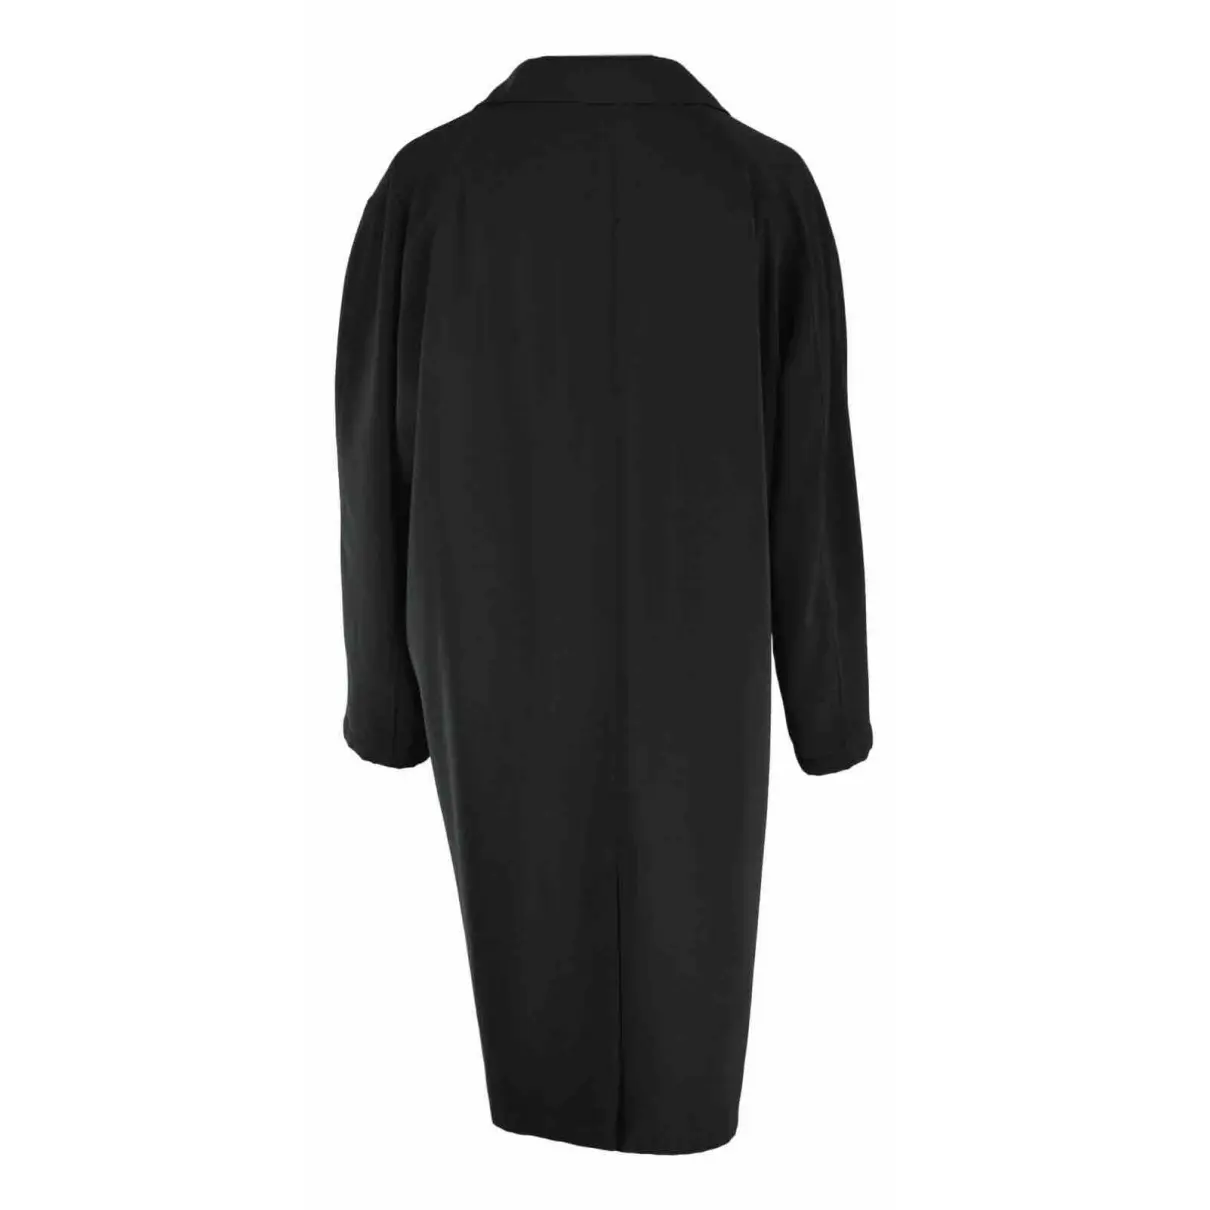 Buy Armani Collezioni Black Polyester Coat online